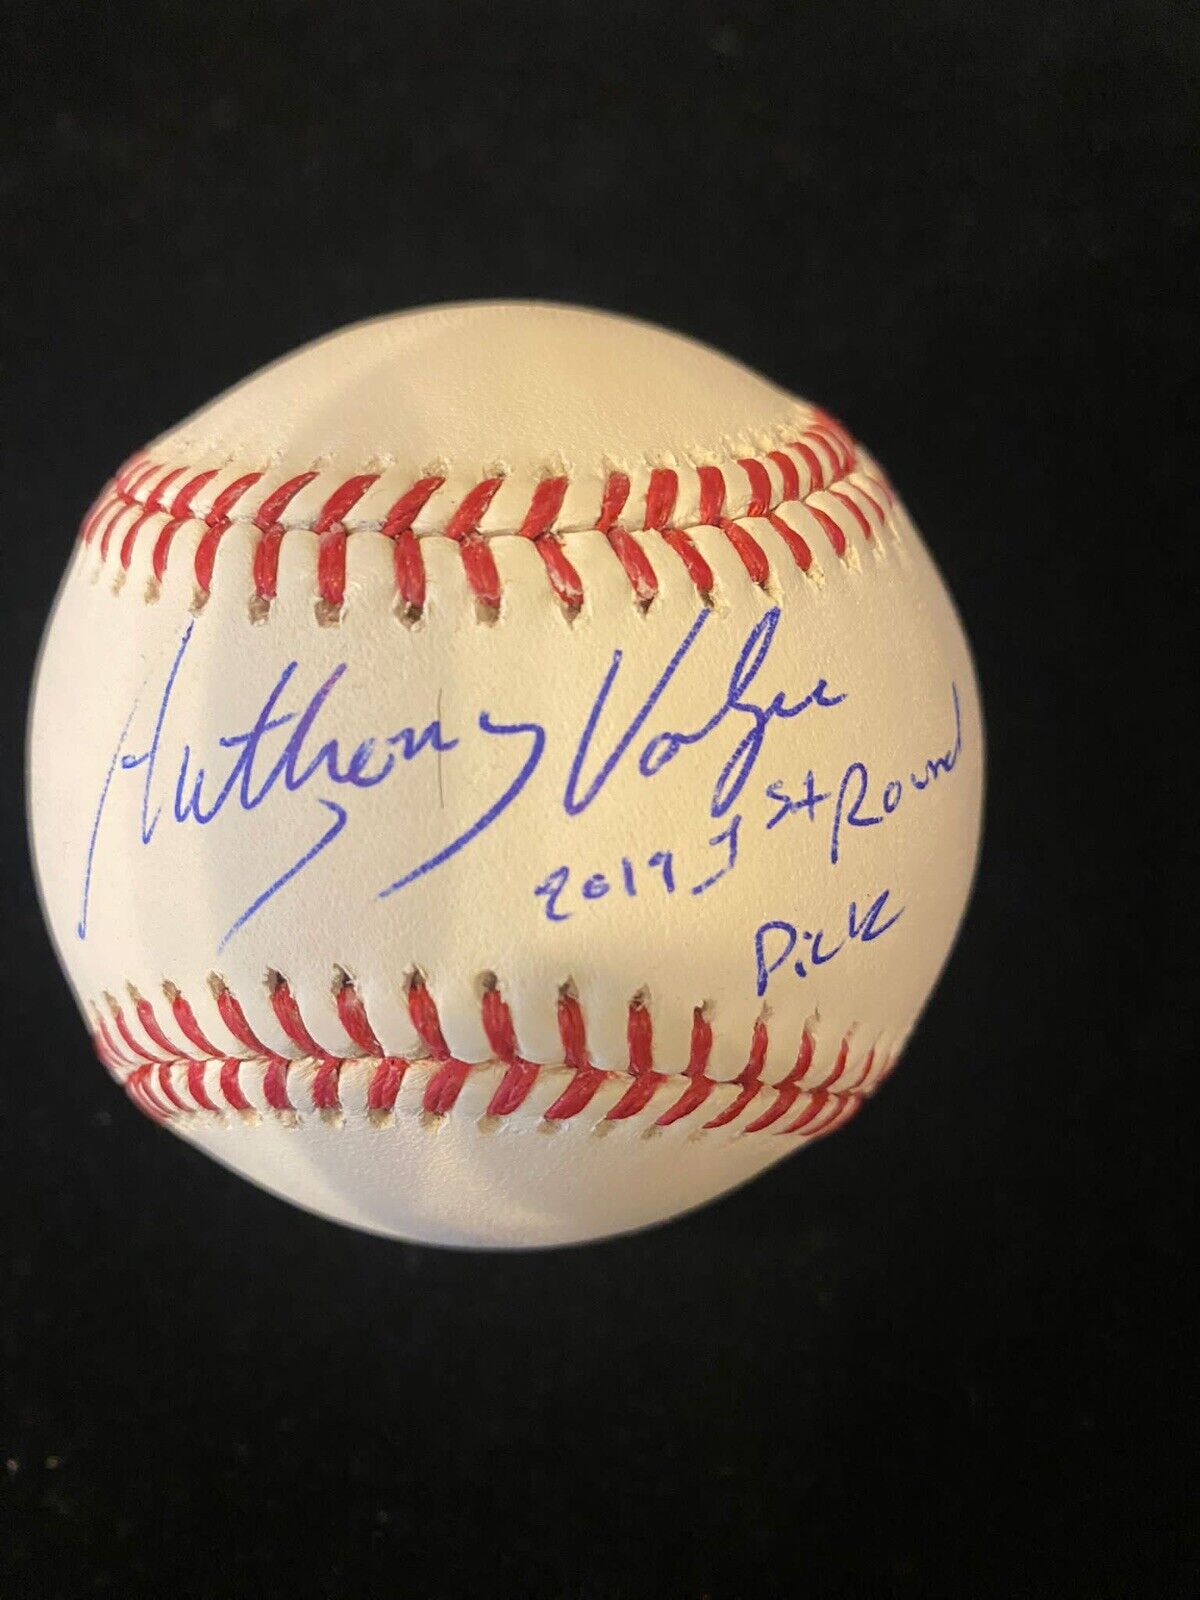 Anthony Volpe Signed Baseball 2019 1st Round Pick Inscription Fanatics Authentic